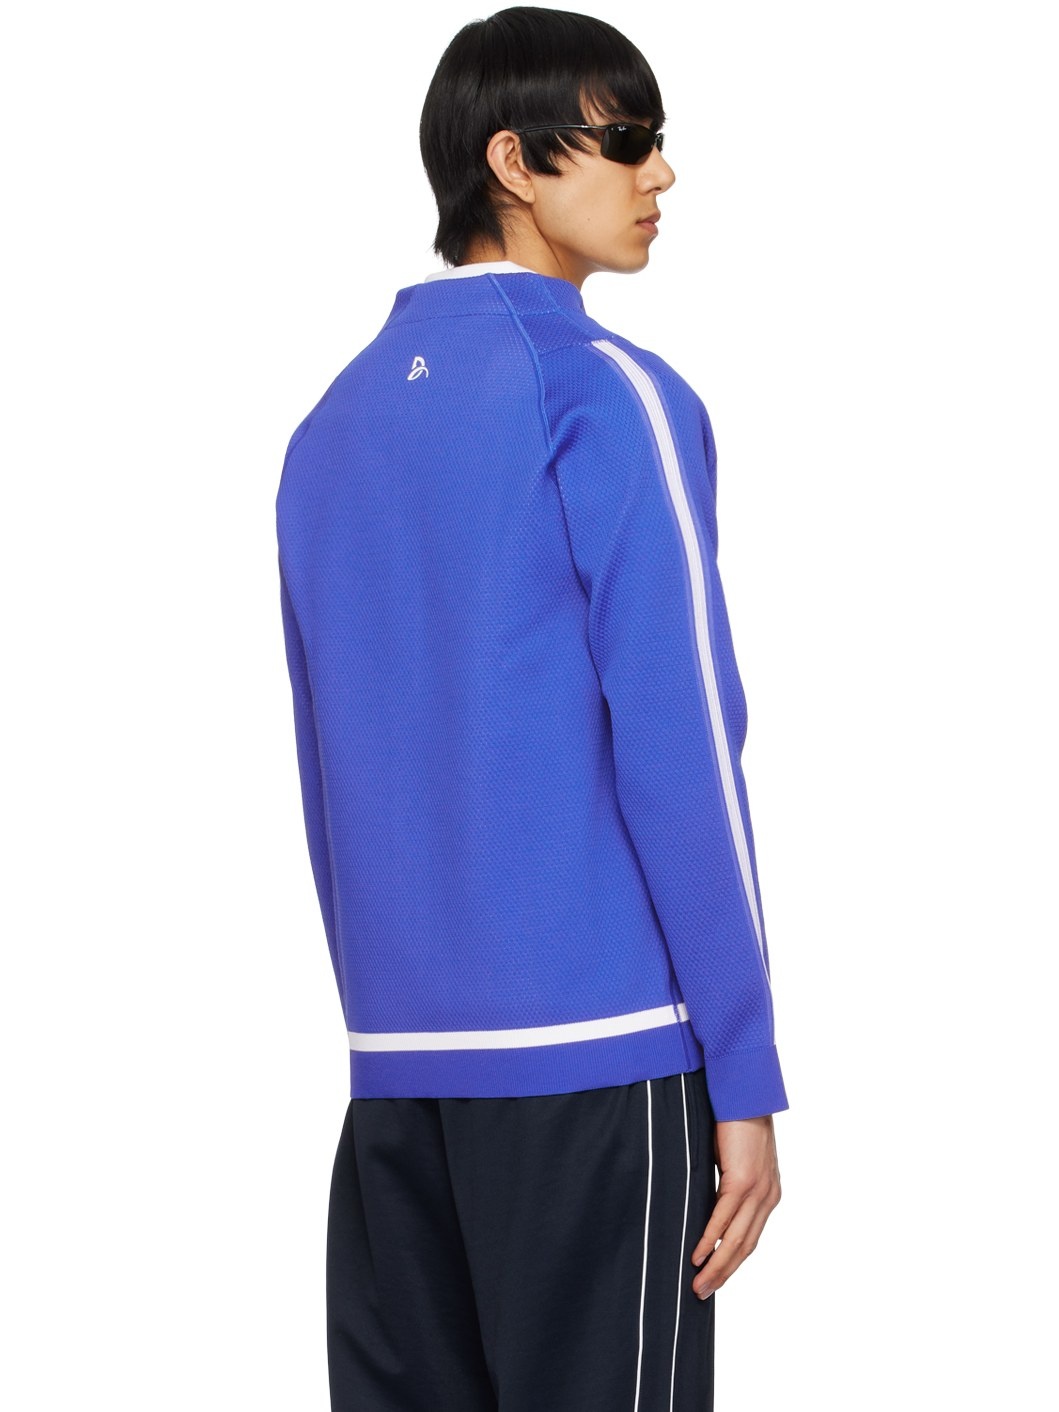 Blue Novak Djokovic Edition Jacket - 3